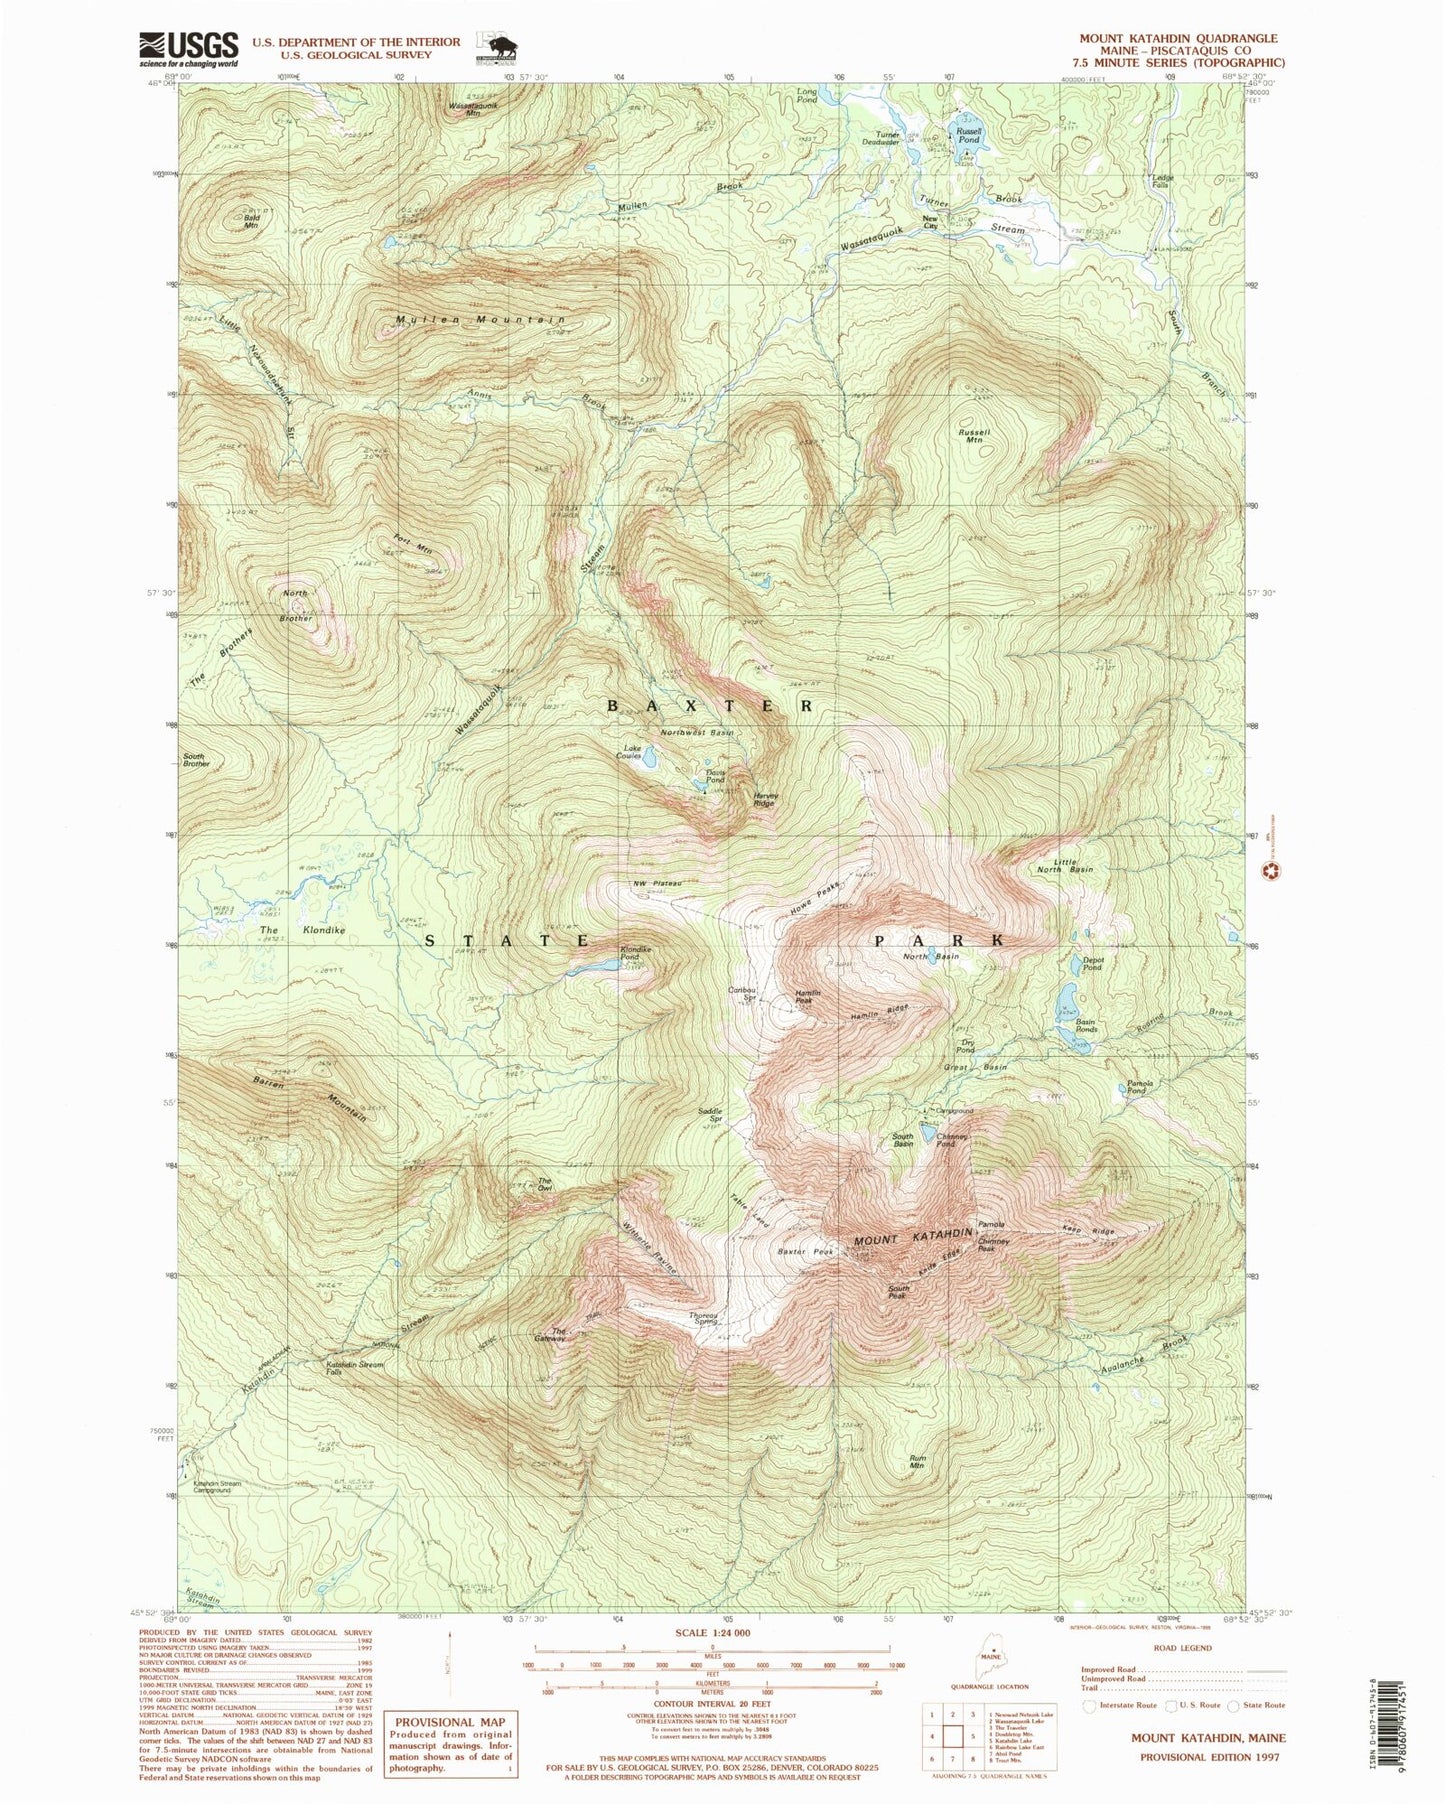 USGS Classic Mount Katahdin Maine 7.5'x7.5' Topo Map Image